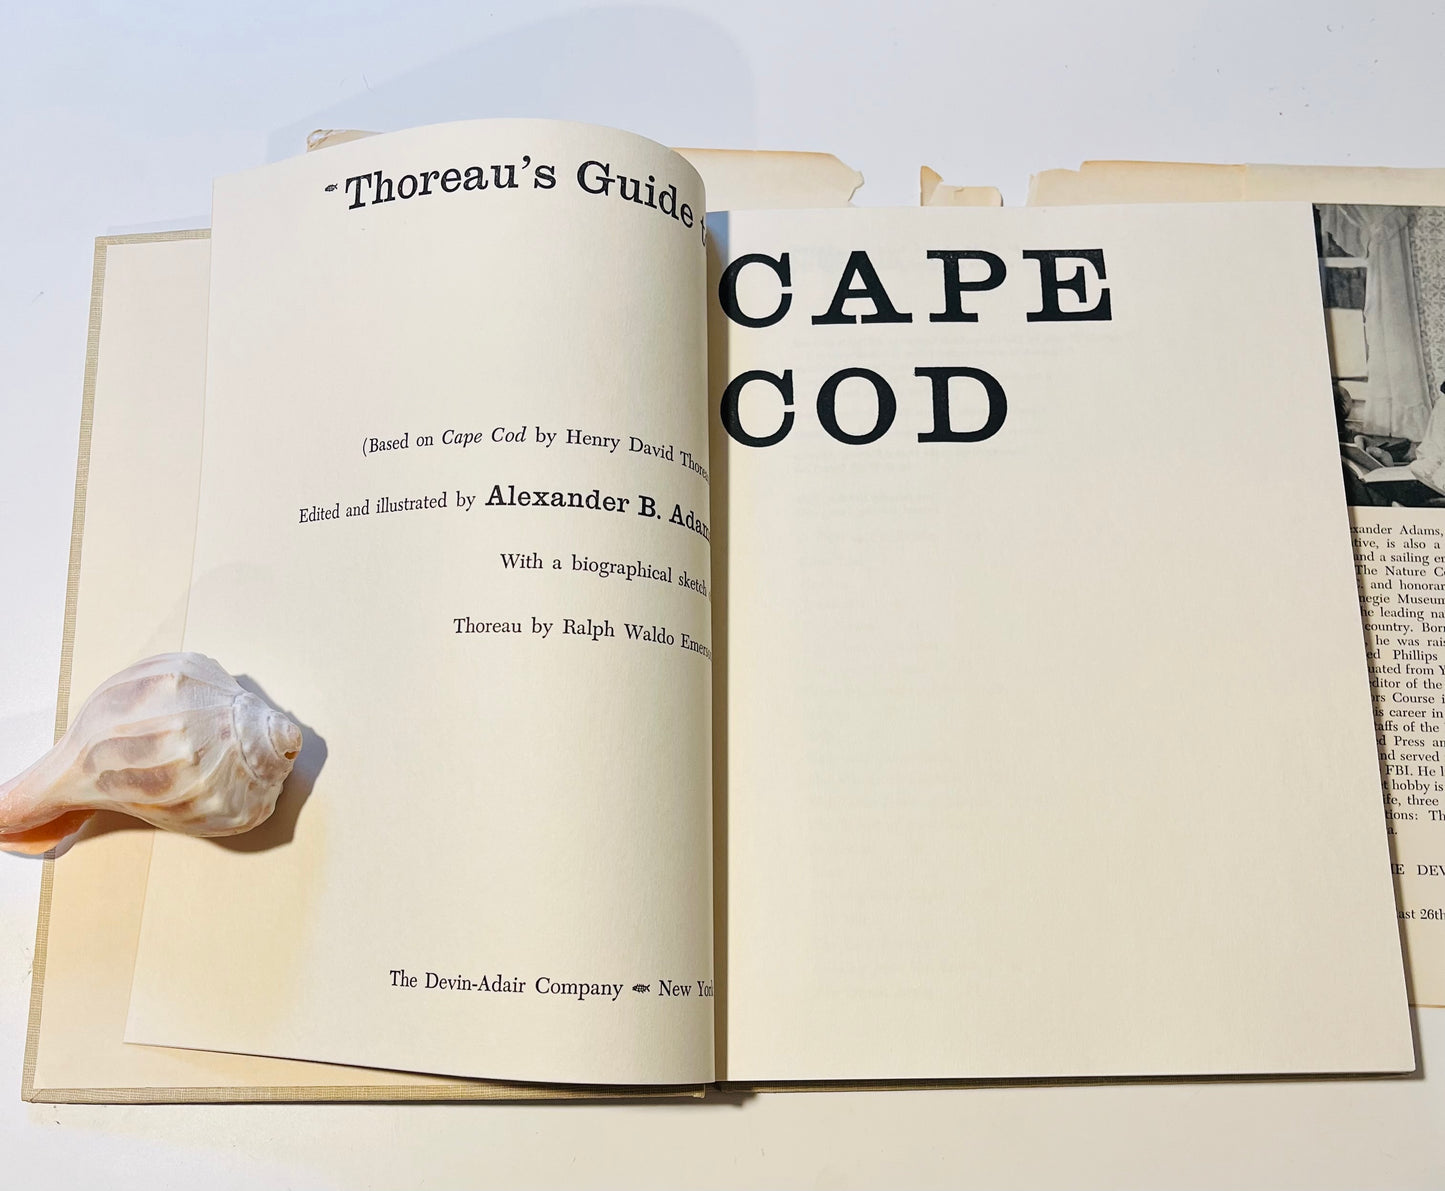 Thoreau's Guide to Cape Cod